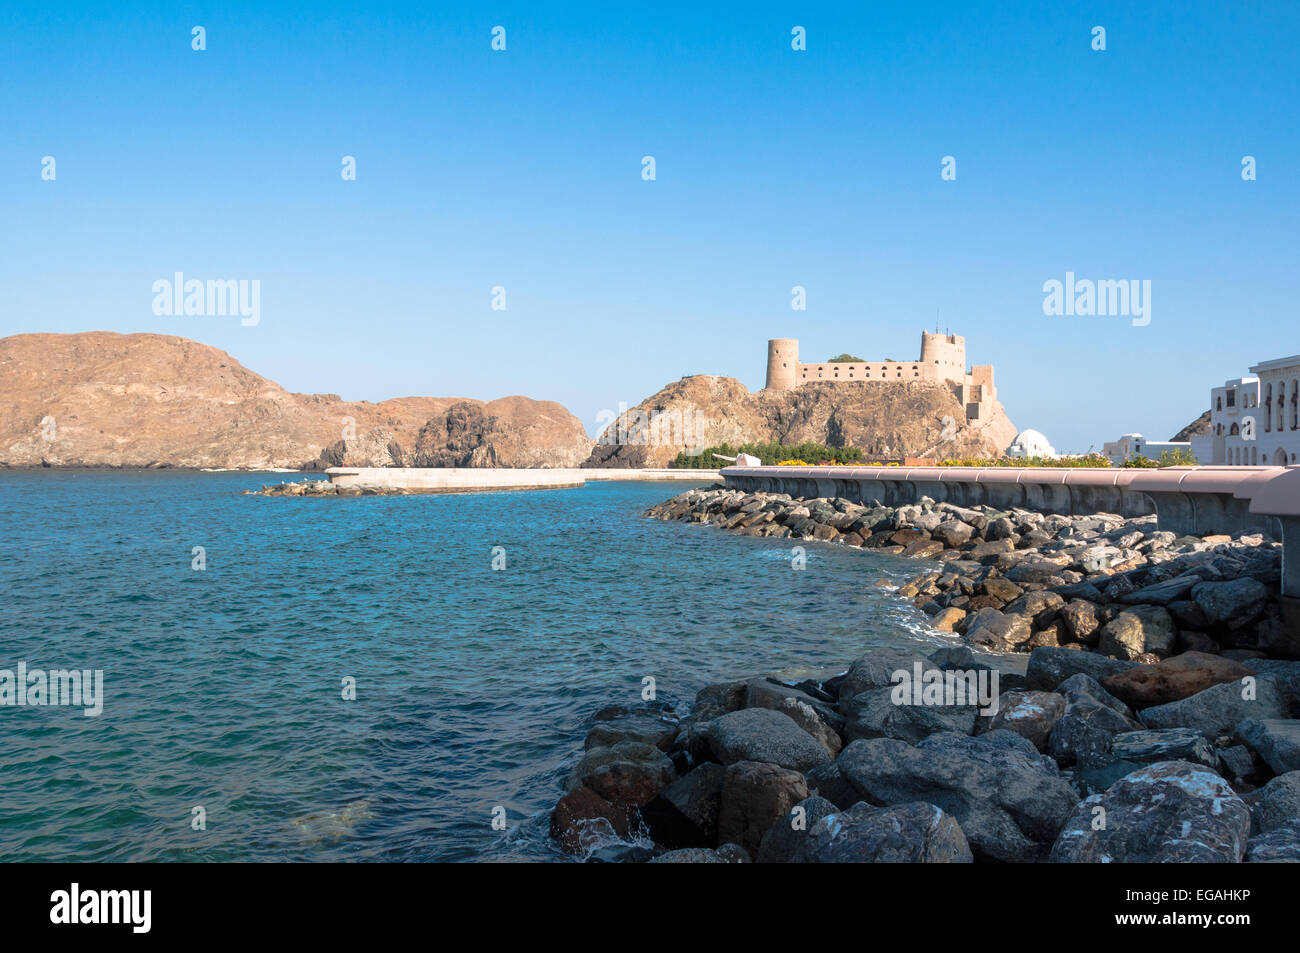 Le Fort Al Jalali, Muscat, Oman Banque D'Images